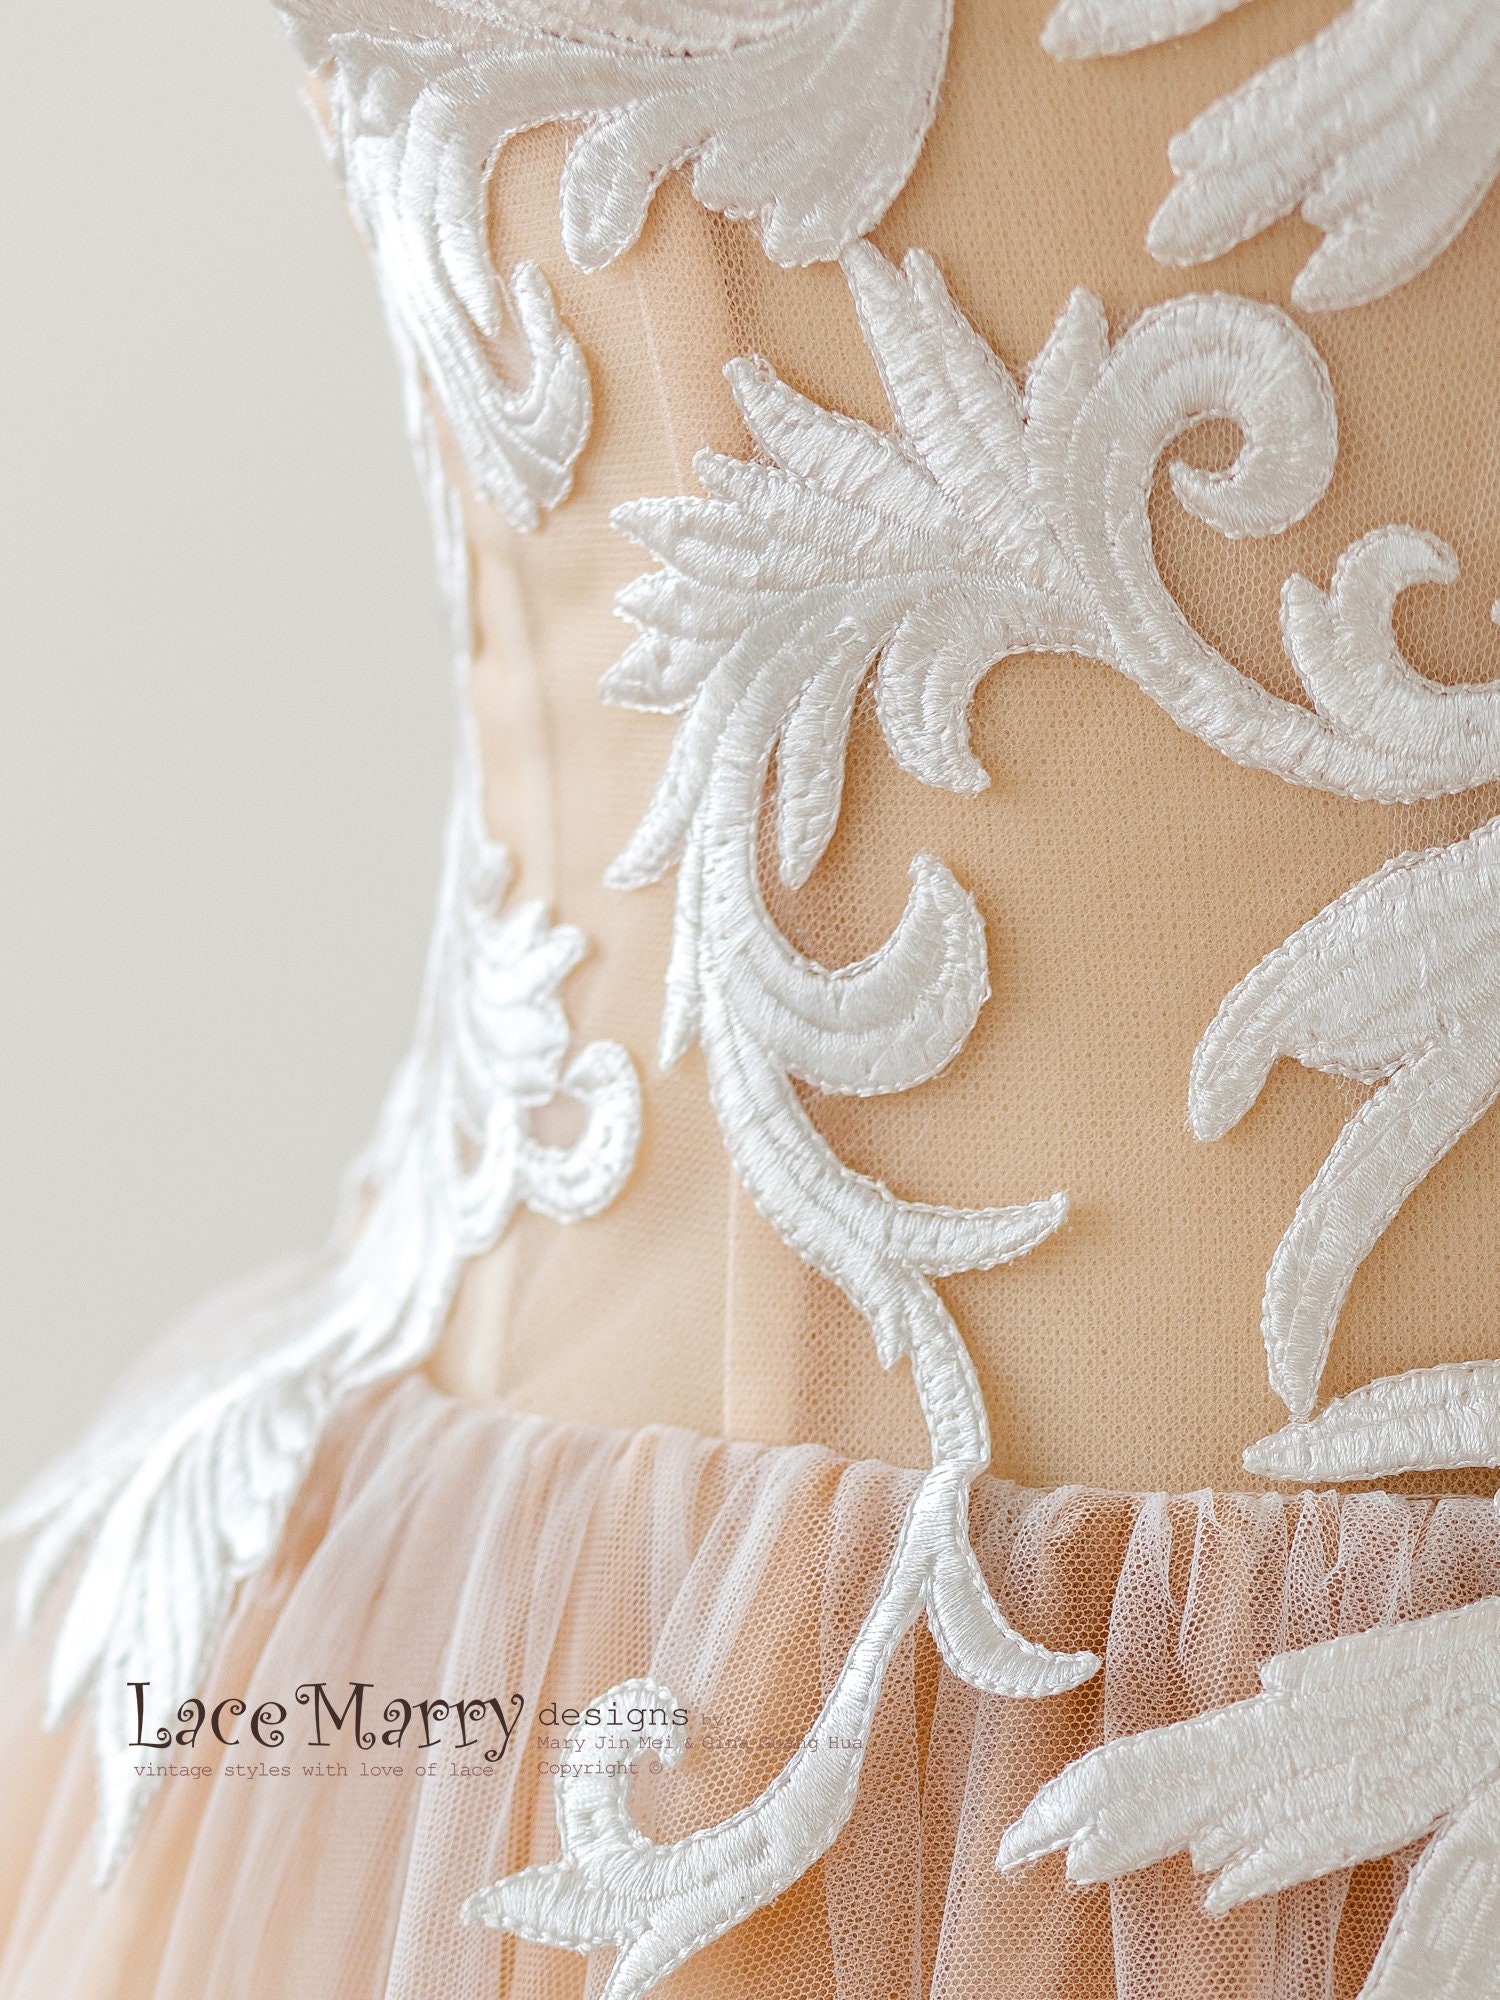 Swirl Lace Strapless Wedding Dress With Corset Back, Corset Wedding Dress,  Nude Wedding Dress, Ombre Wedding Dress, Colored Wedding Dress -  Canada